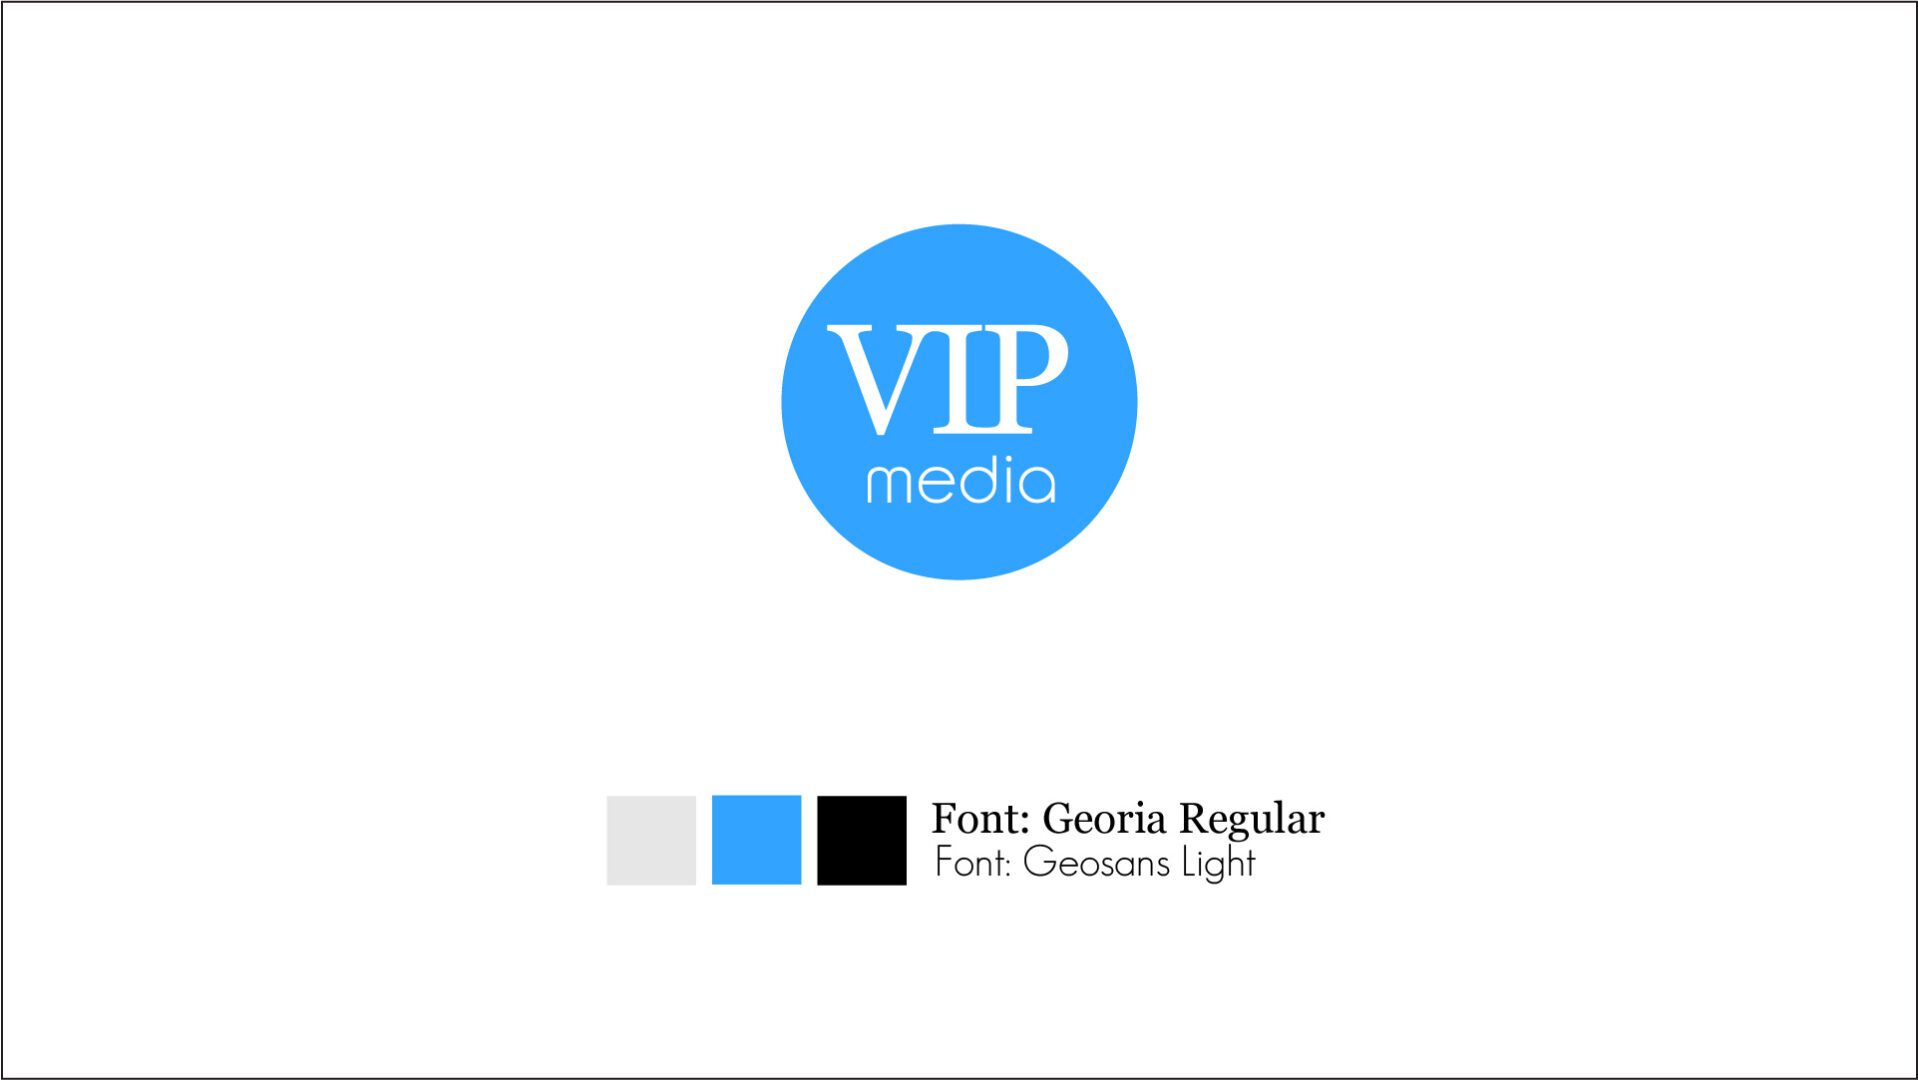 vipmedia.nl logo